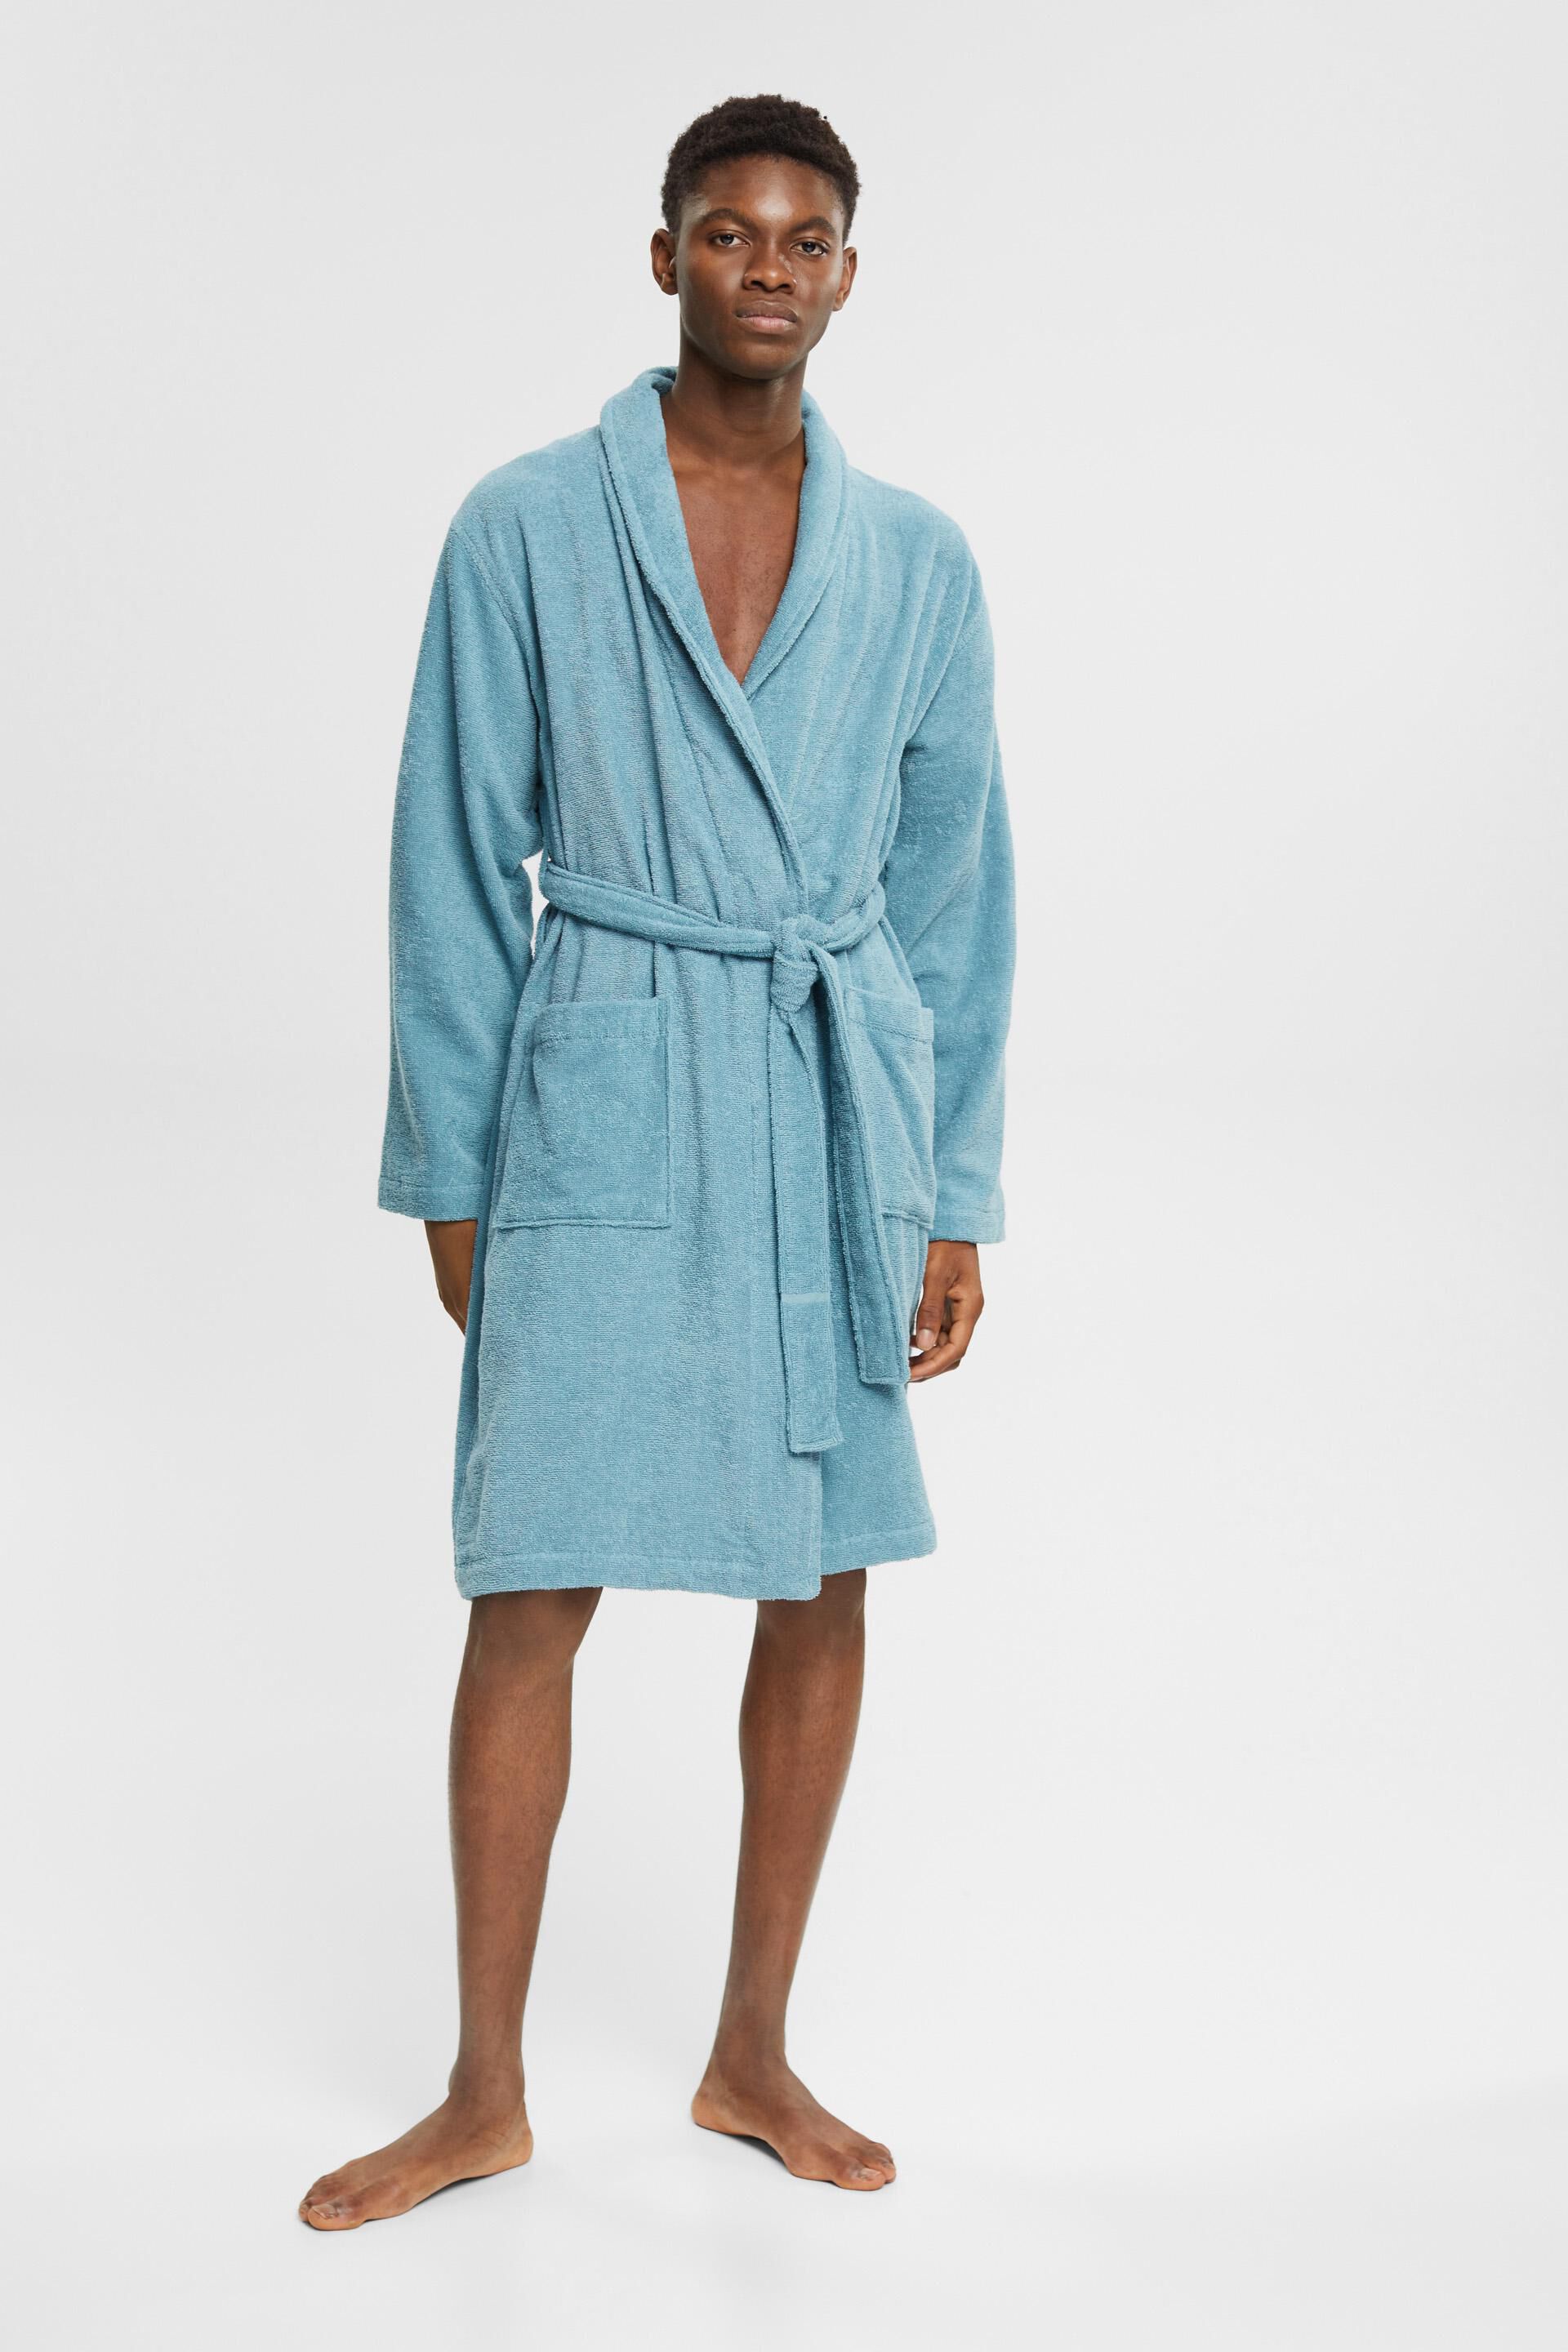 Esprit 100% bathrobe, Unisex cotton